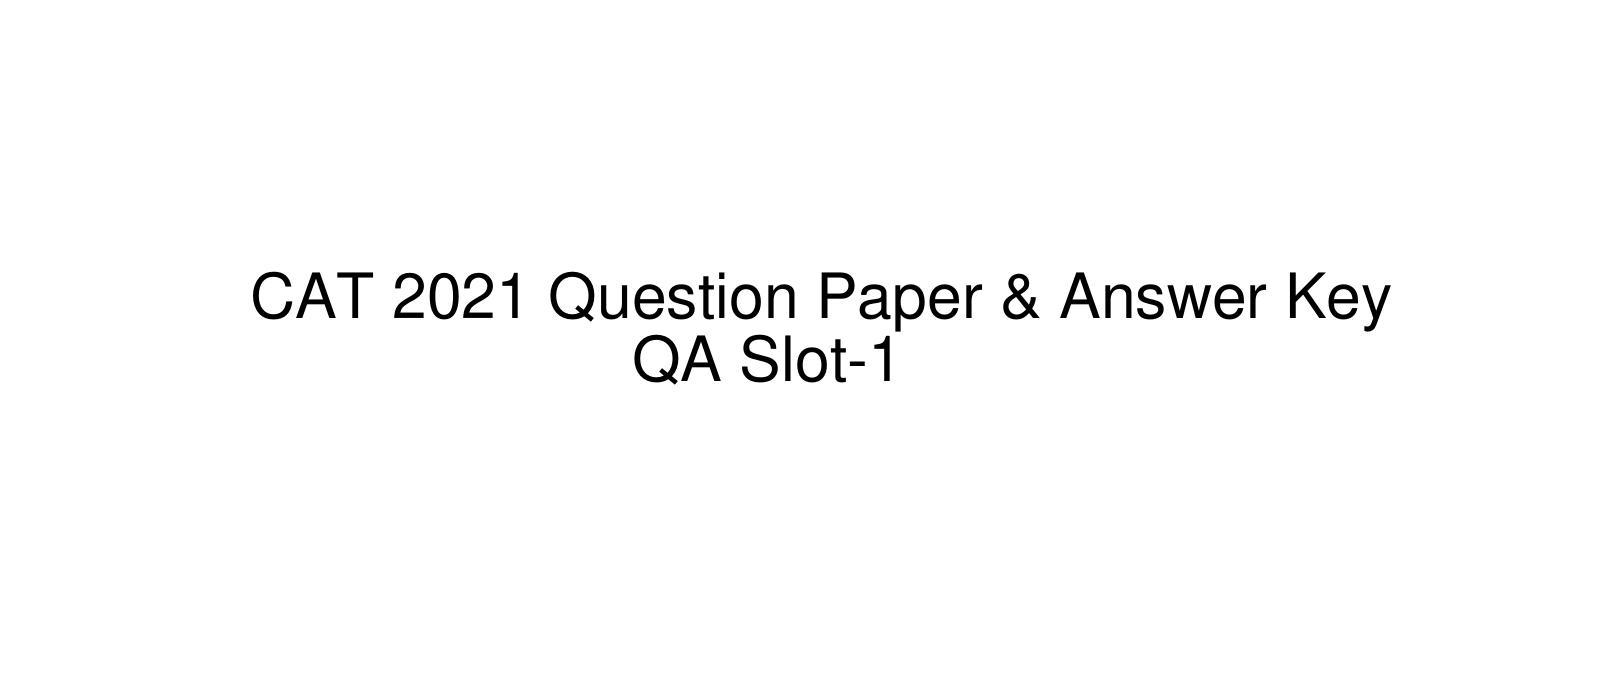 CAT 2022 CAT QA Slot 1 Question Paper - Page 1